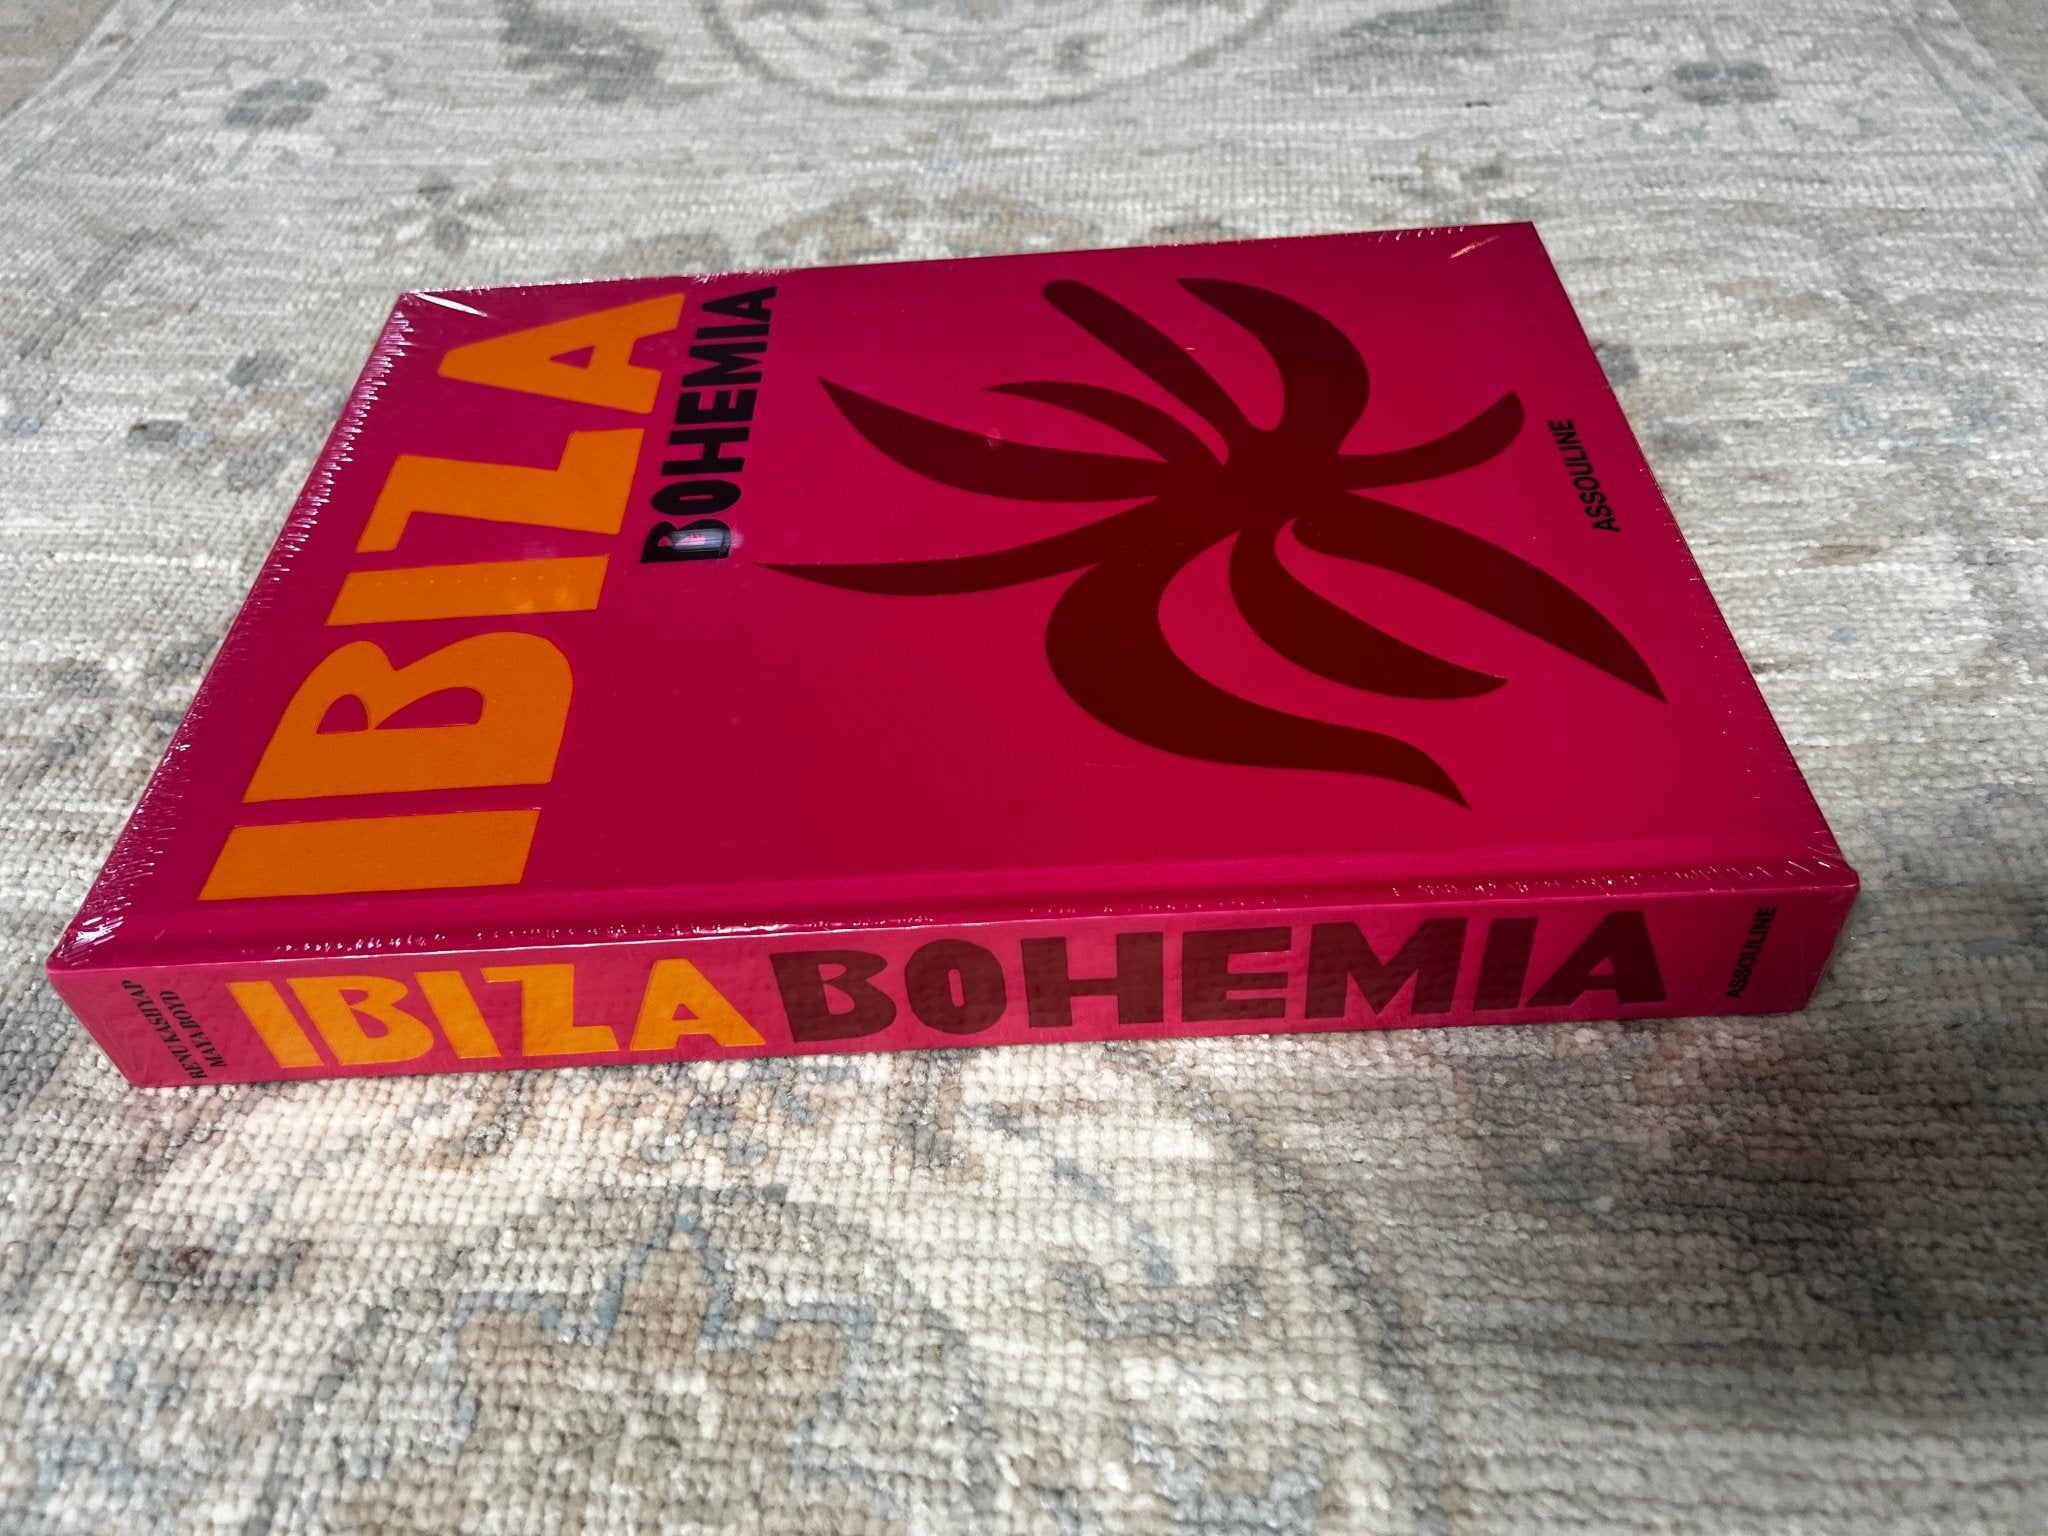 Ibiza Bohemia Designer Travel Coffee Table Book | Banana Manor Rug Company